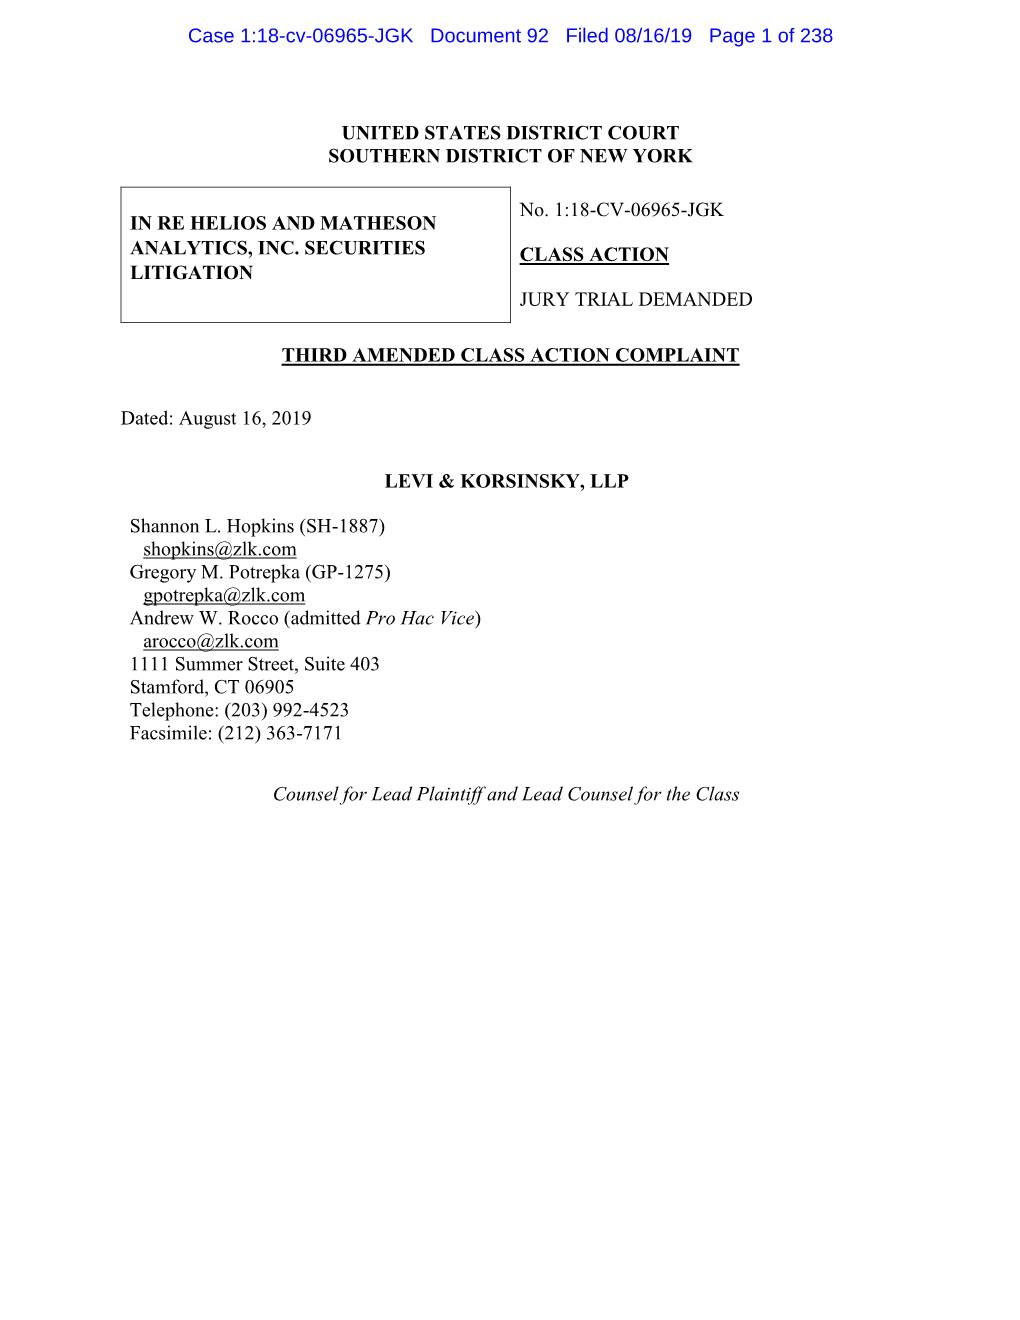 Case 1:18-Cv-06965-JGK Document 92 Filed 08/16/19 Page 1 of 238